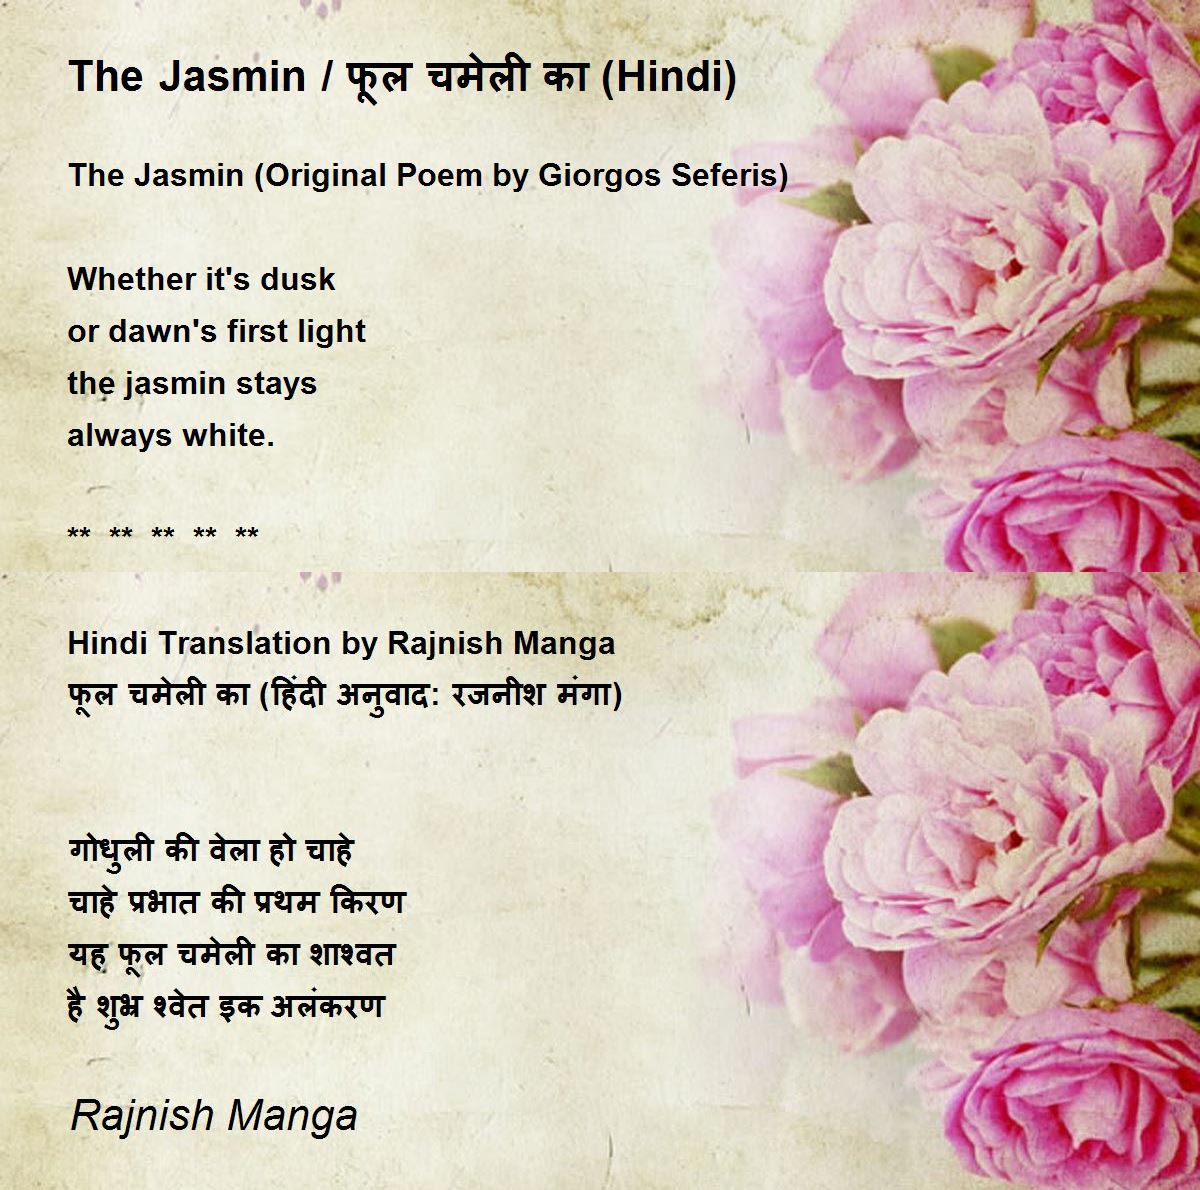 The Jasmin / फूल चमेली का (Hindi) - The Jasmin / फूल चमेली का (Hindi) Poem  by Rajnish Manga